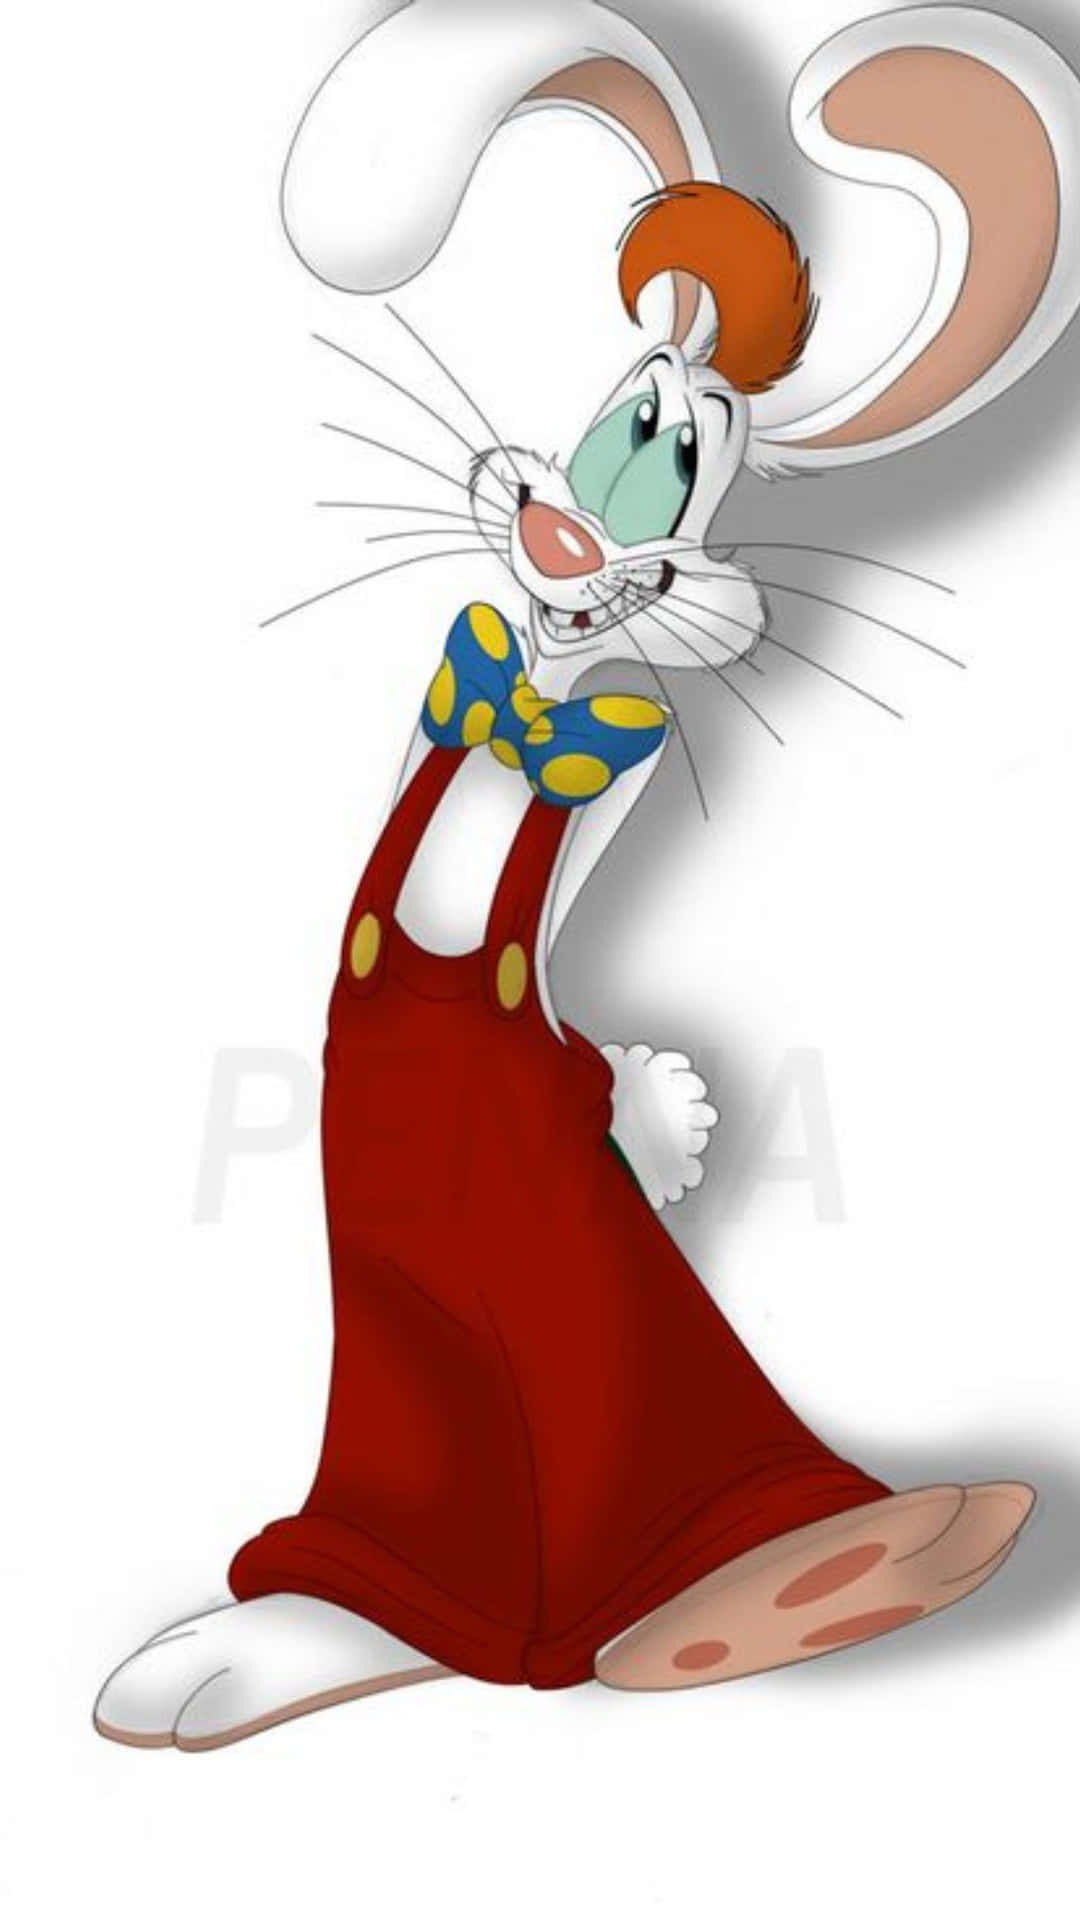 Roger Rabbit Red Overalls Background